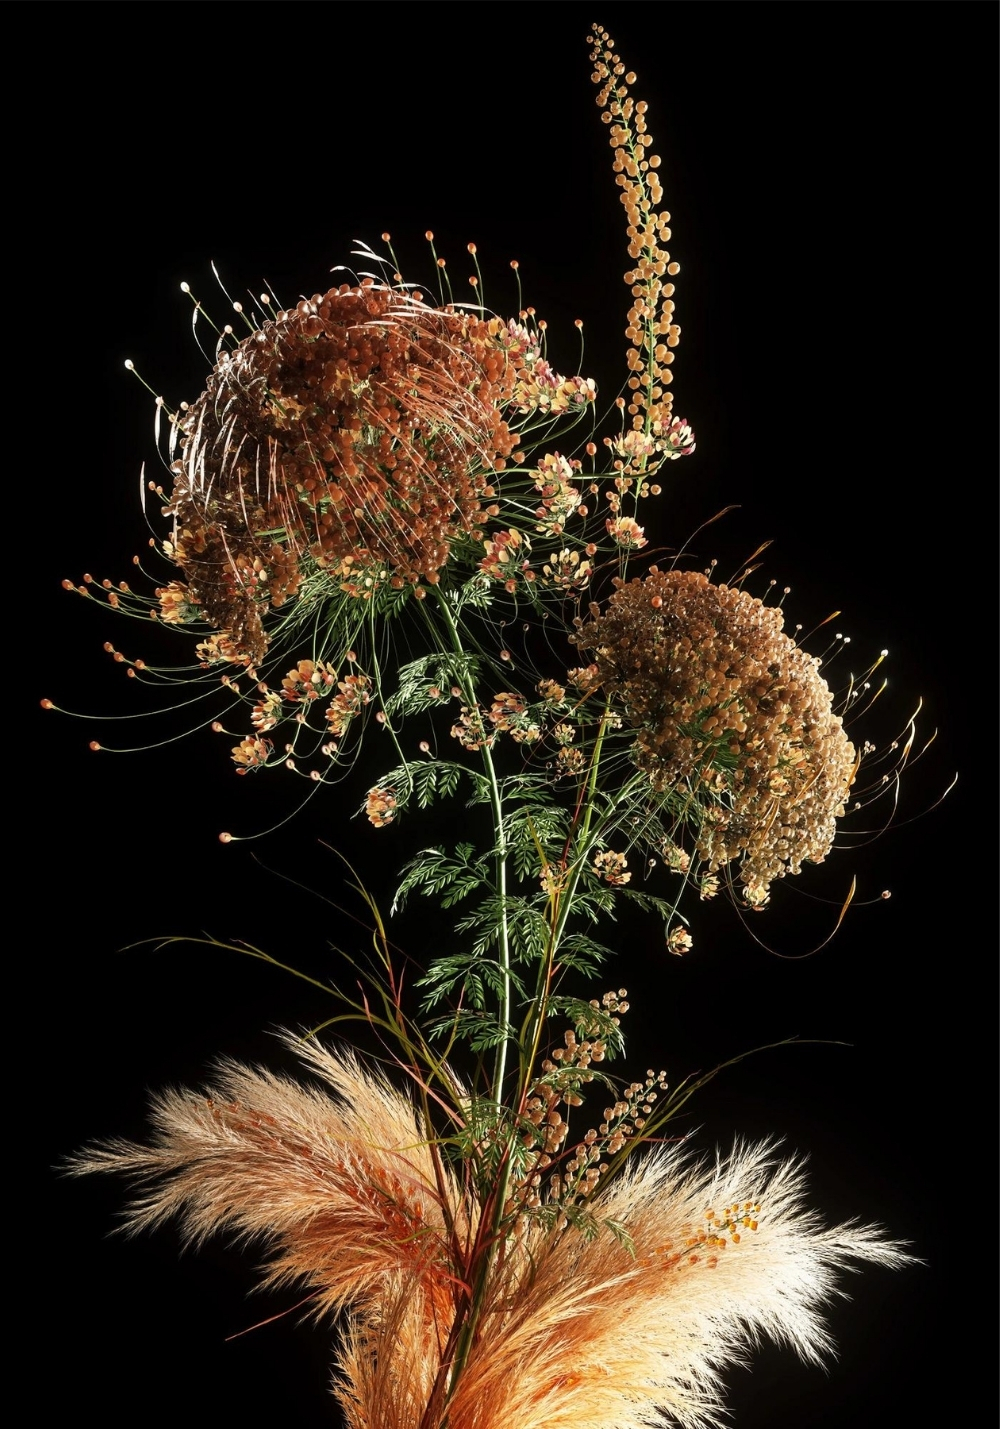 Shy Studio Recreates the Natural World Through a Series of Lifelike Botanicals Digital Art